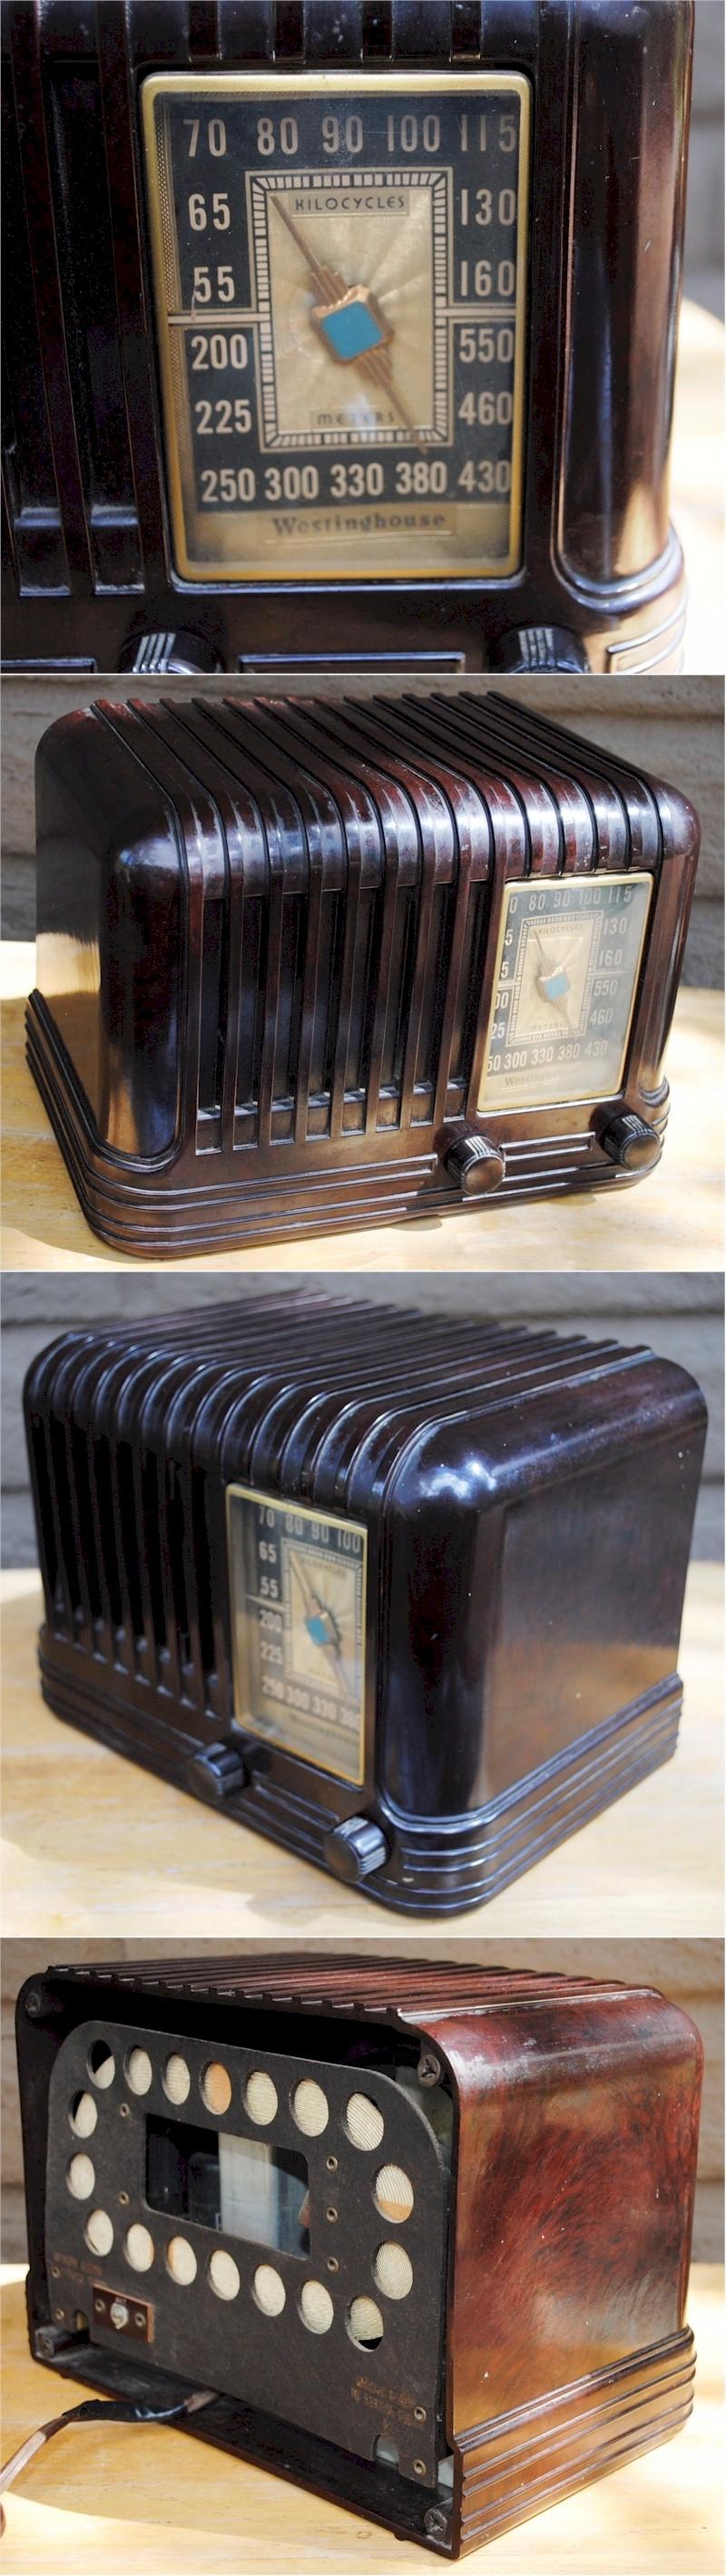 Westinghouse Radio (unknown model)